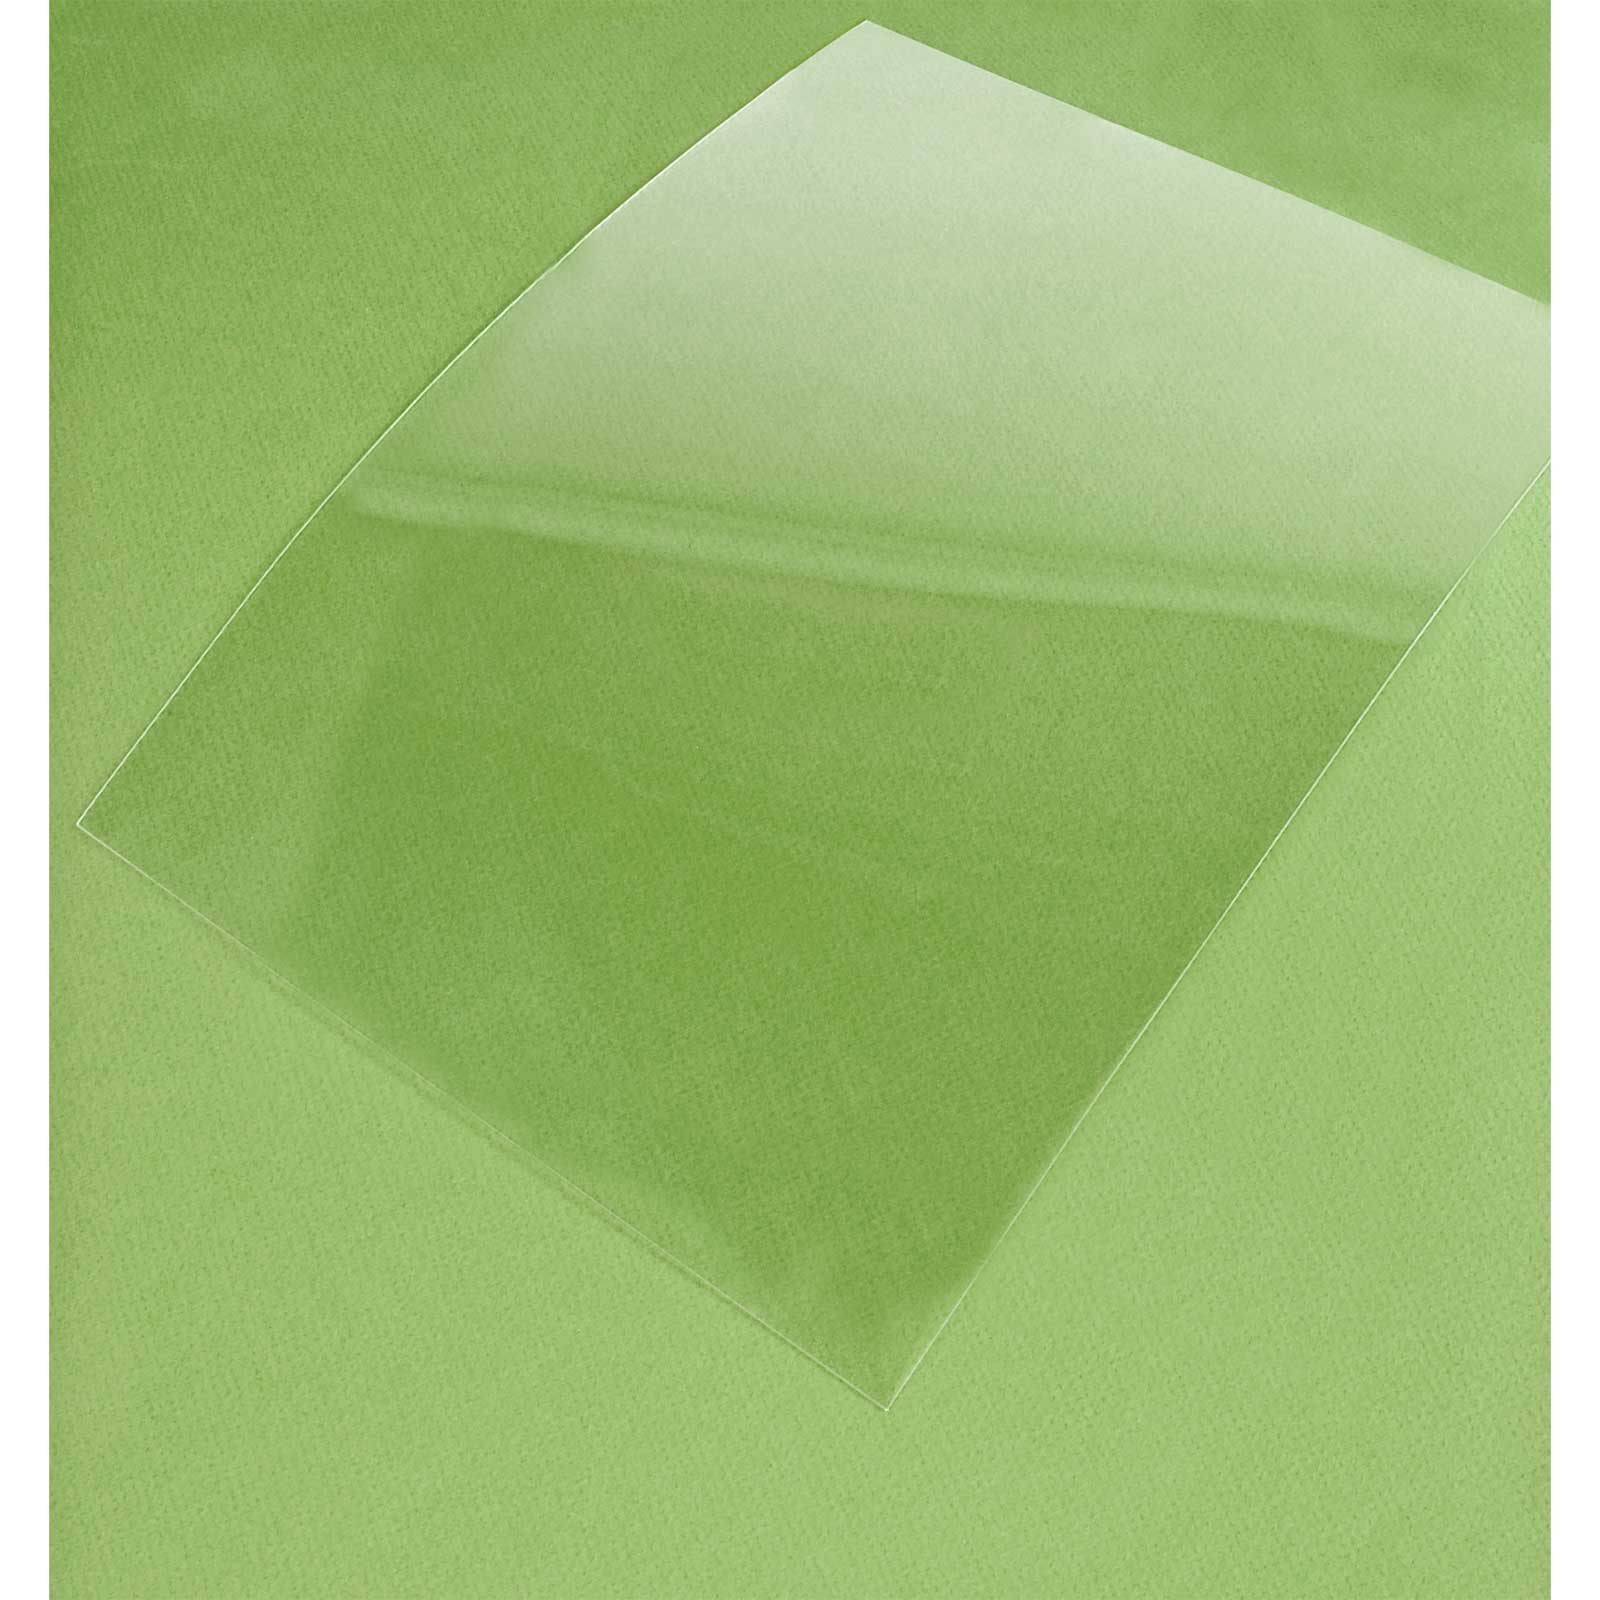 Polycarbonate Plastic Sheet, 11 x 14 x.60, 2 Pieces - Micro - Mark Arts & Crafts